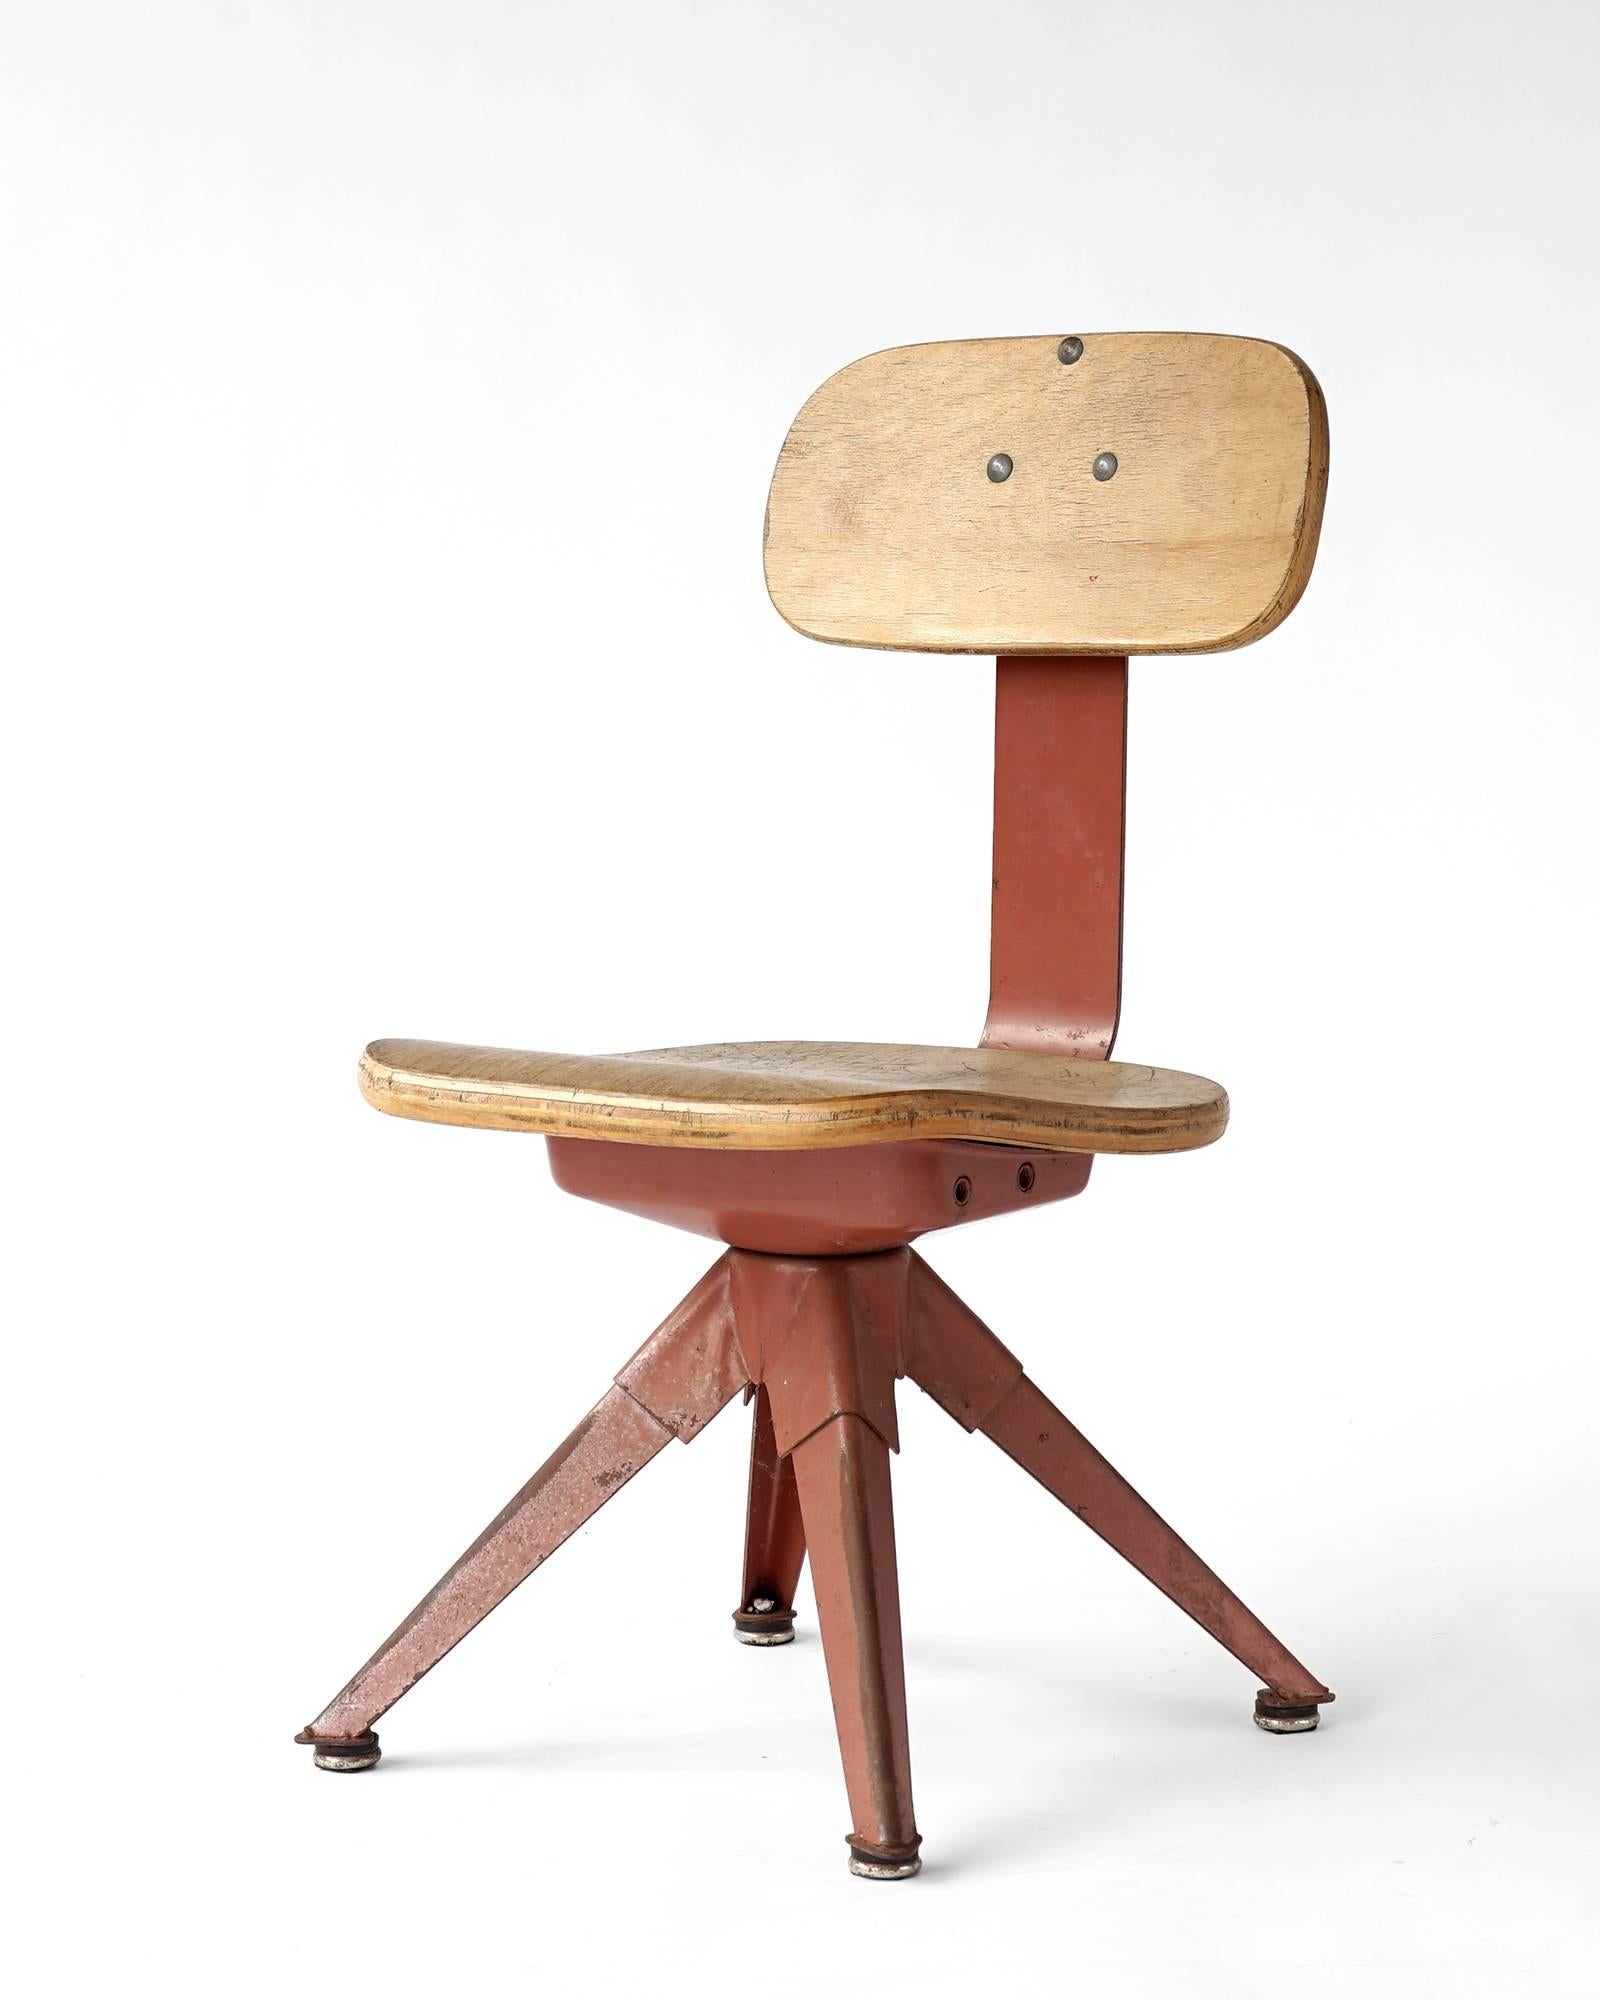 Steel Odelberg Olsen Influenced Child's Chair